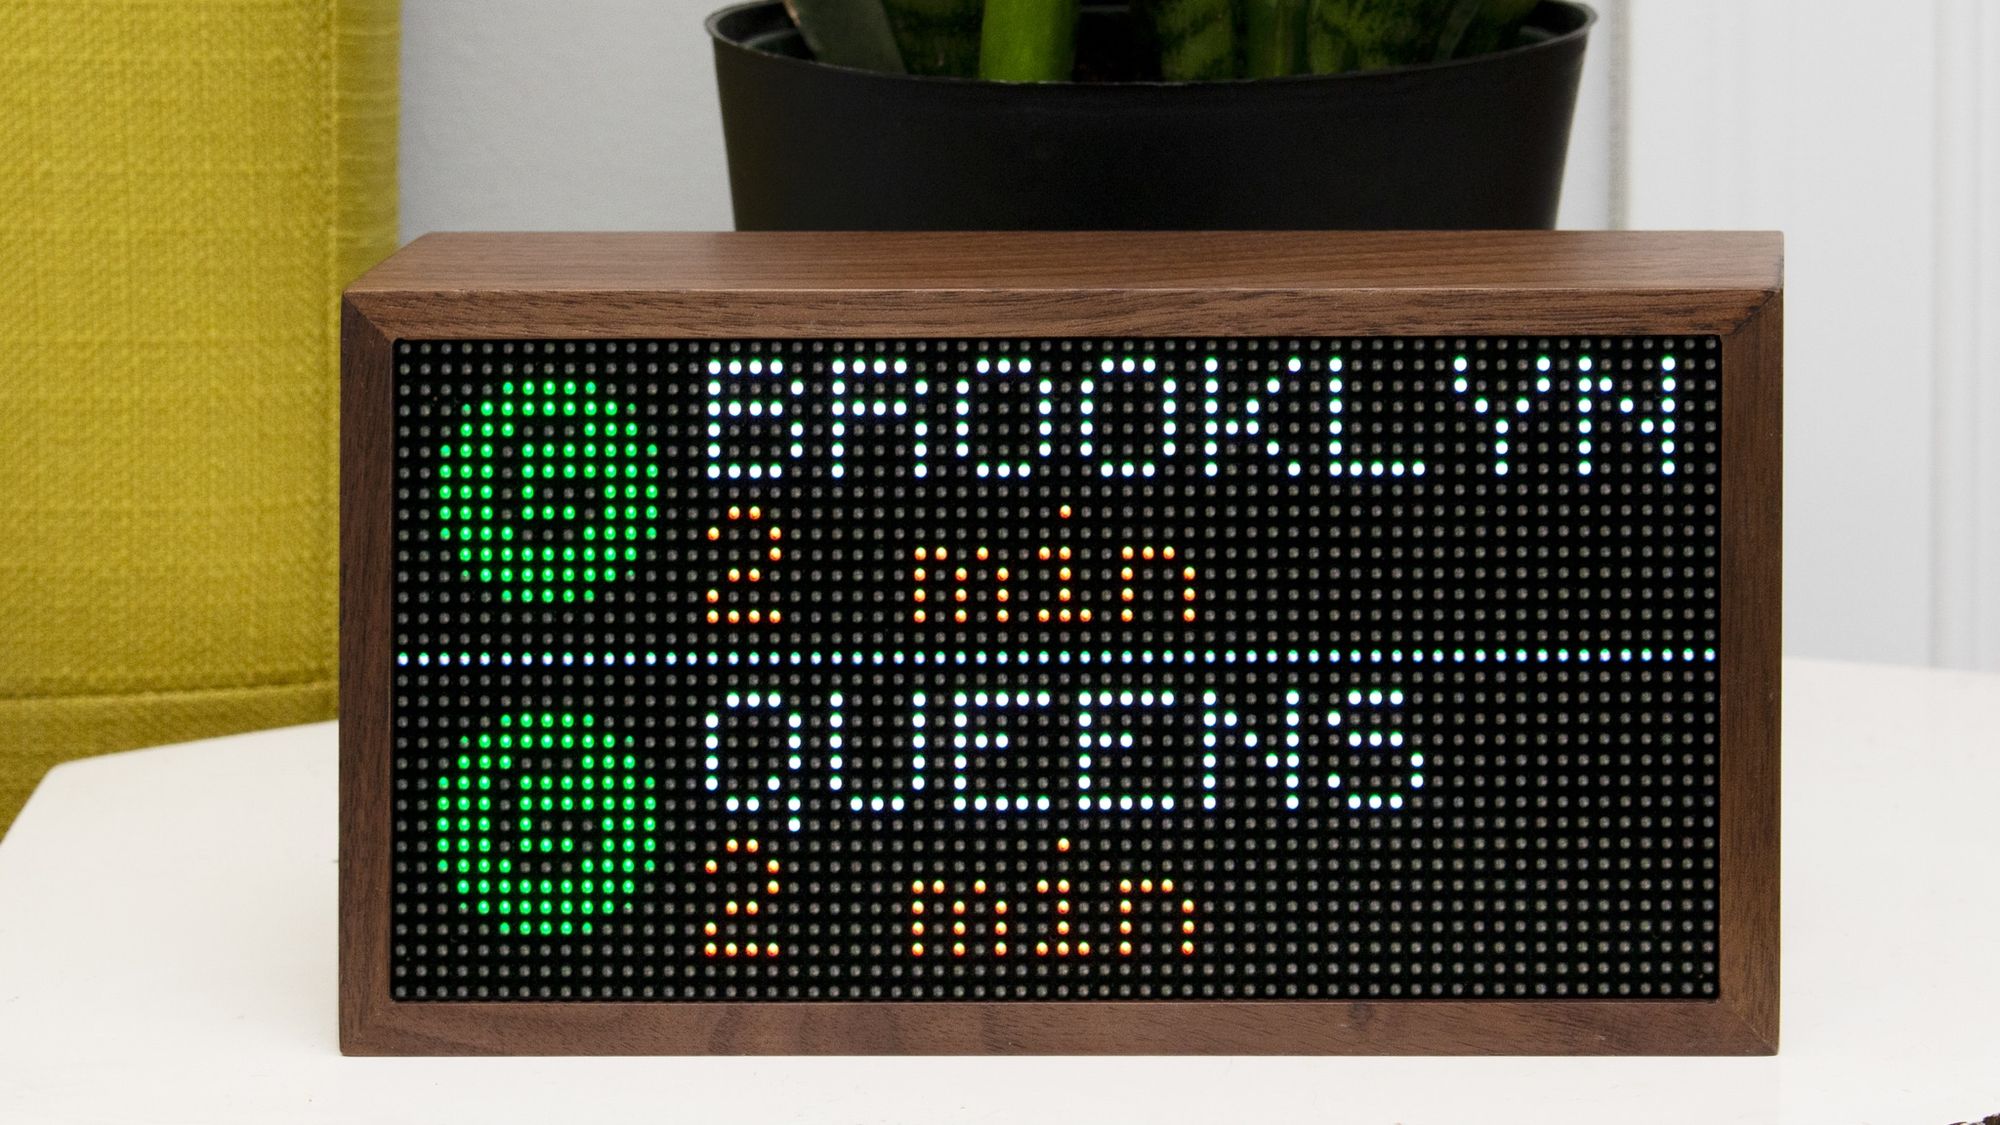 Brooklyn Startup Company Brings Retro Design To New Smart Clock